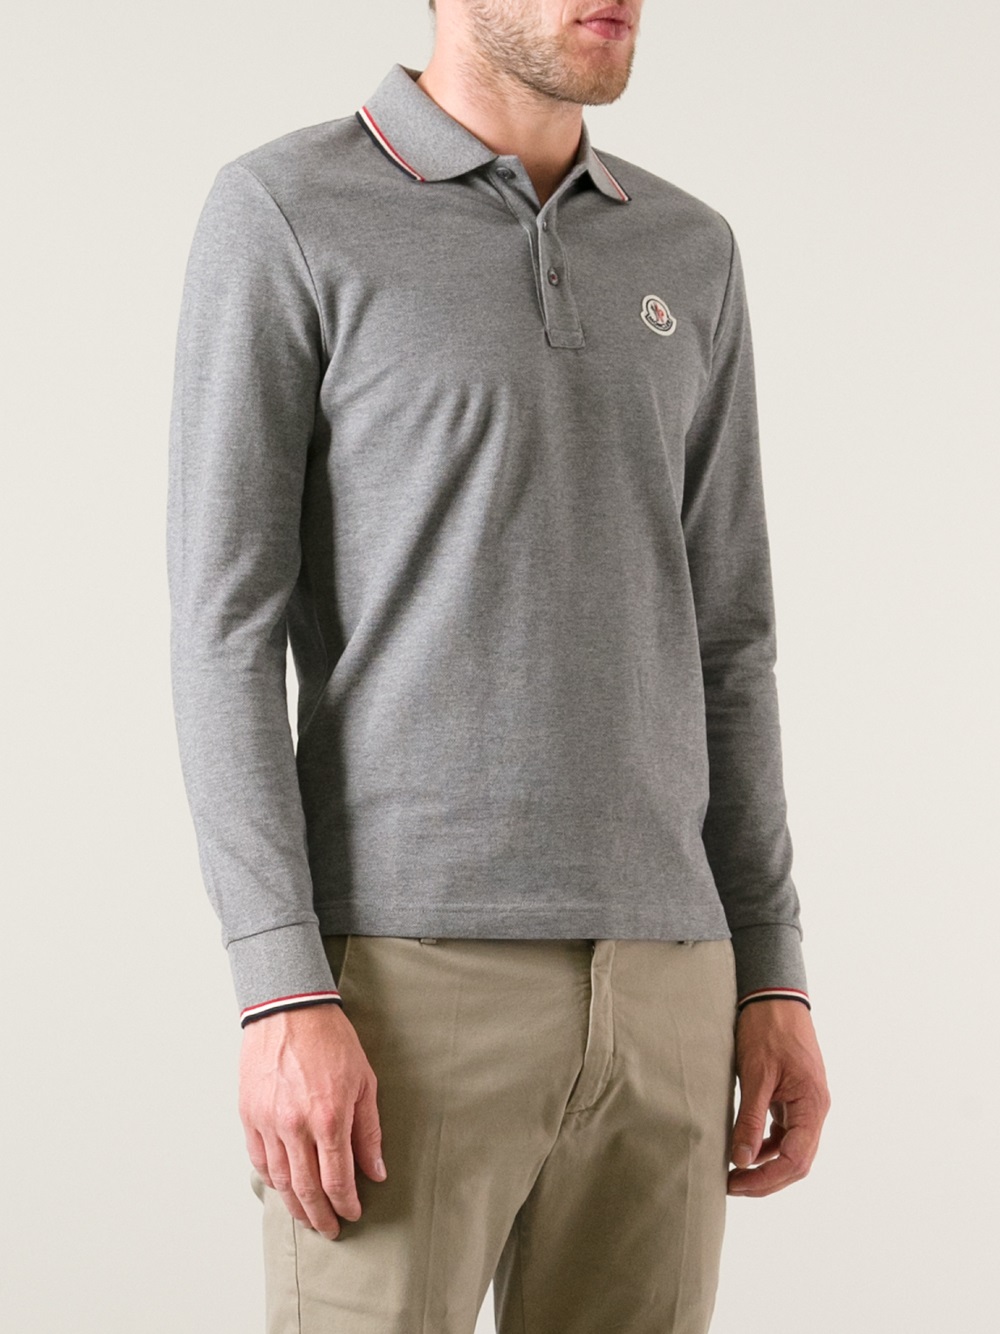 Lyst - Moncler Long Sleeved Polo Shirt in Gray for Men